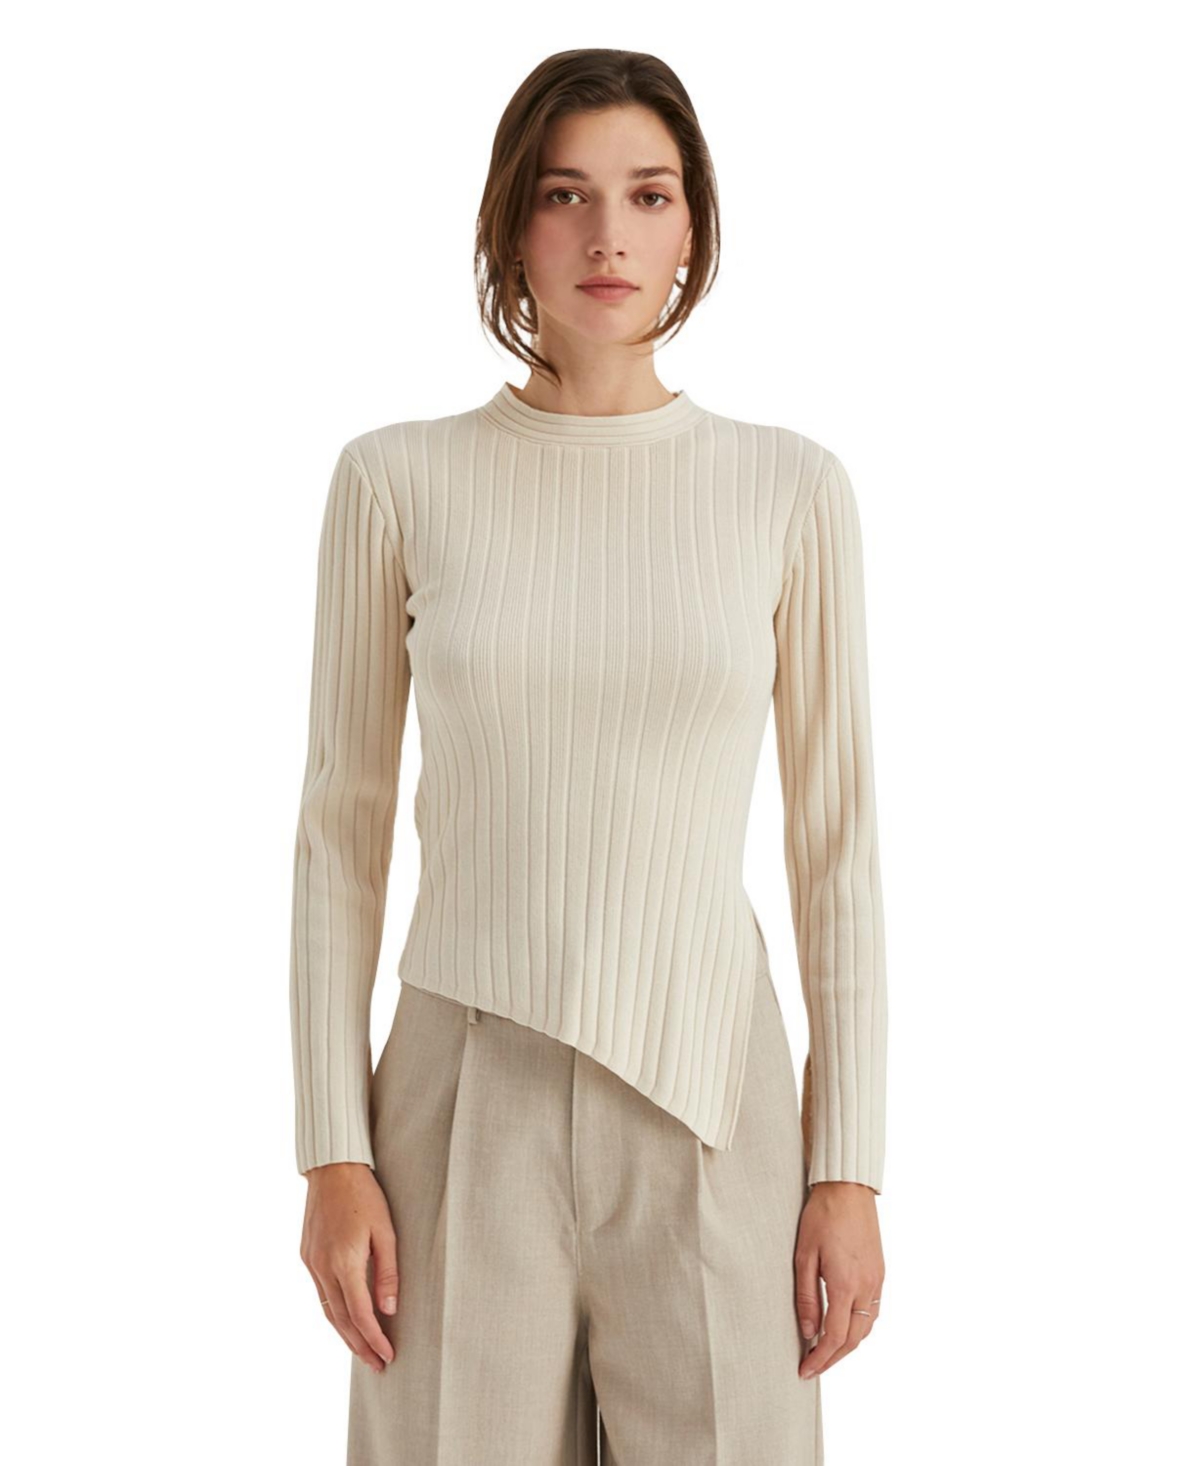 Women's Danielle Rib Knit Asymmetric Hem Top - Open white + cream